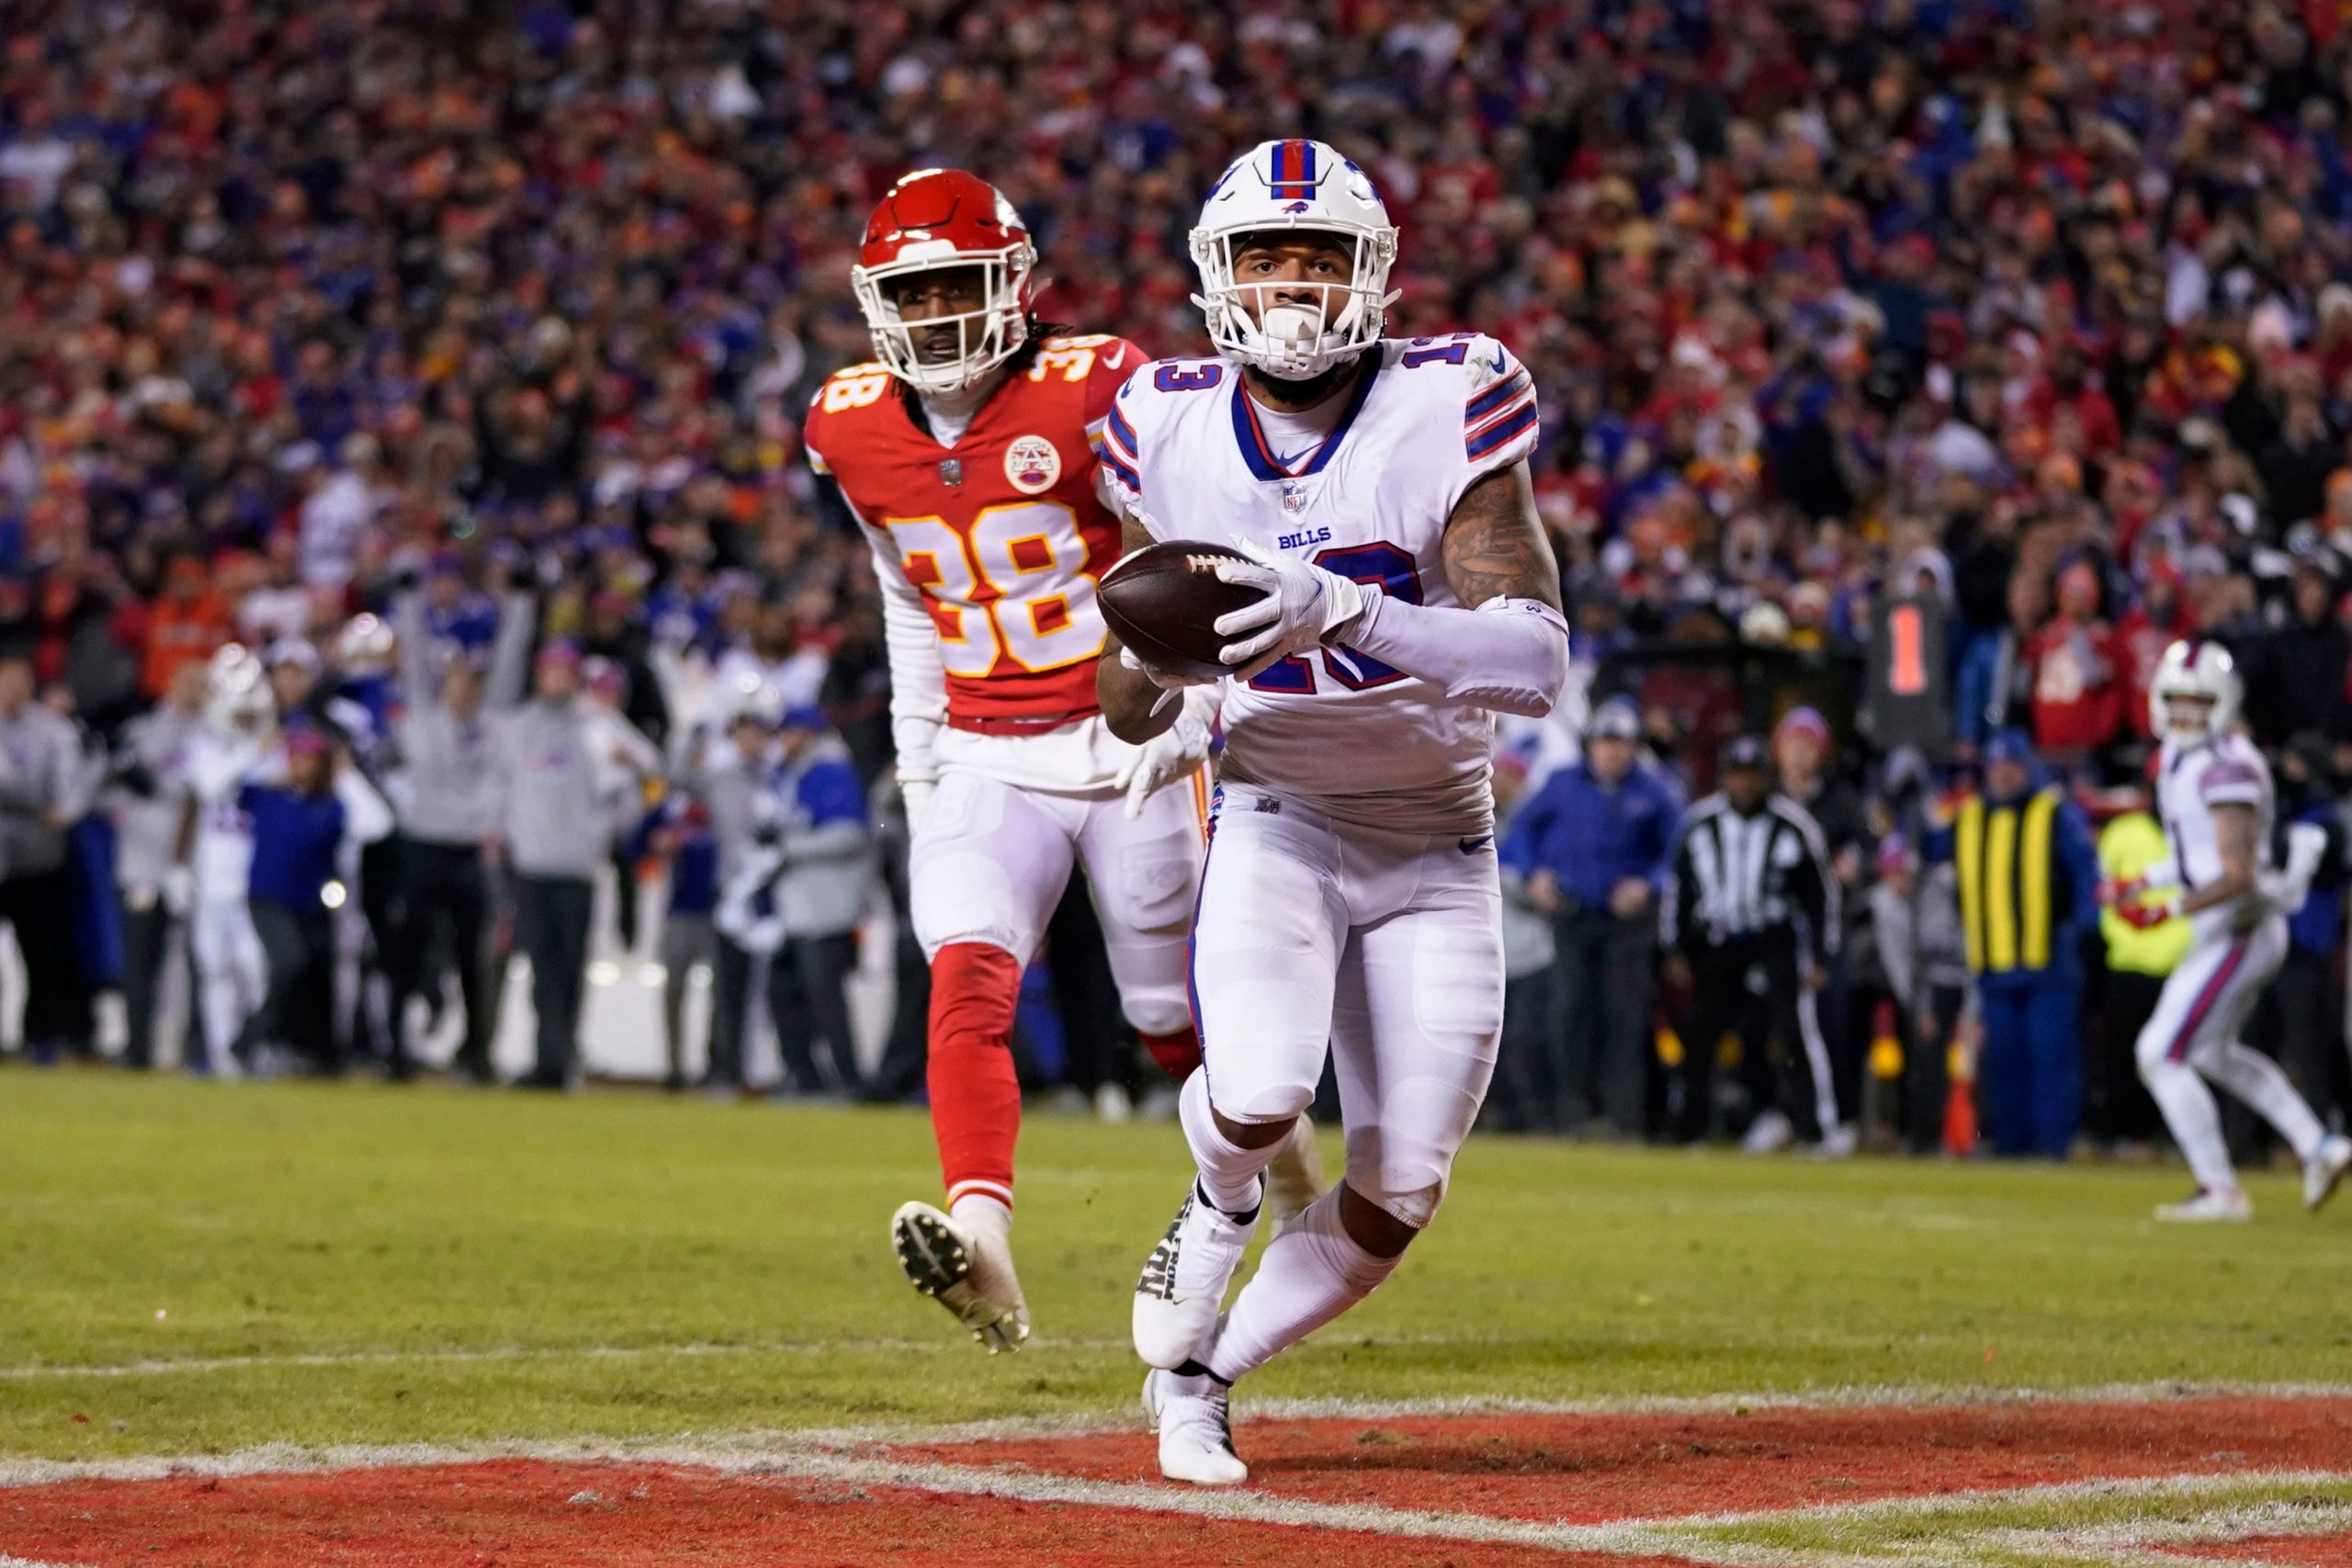 NFL: Kansas City Chiefs host Cincinnati Bengals, San Francisco 49ers at Rams for spots in Super Bowl